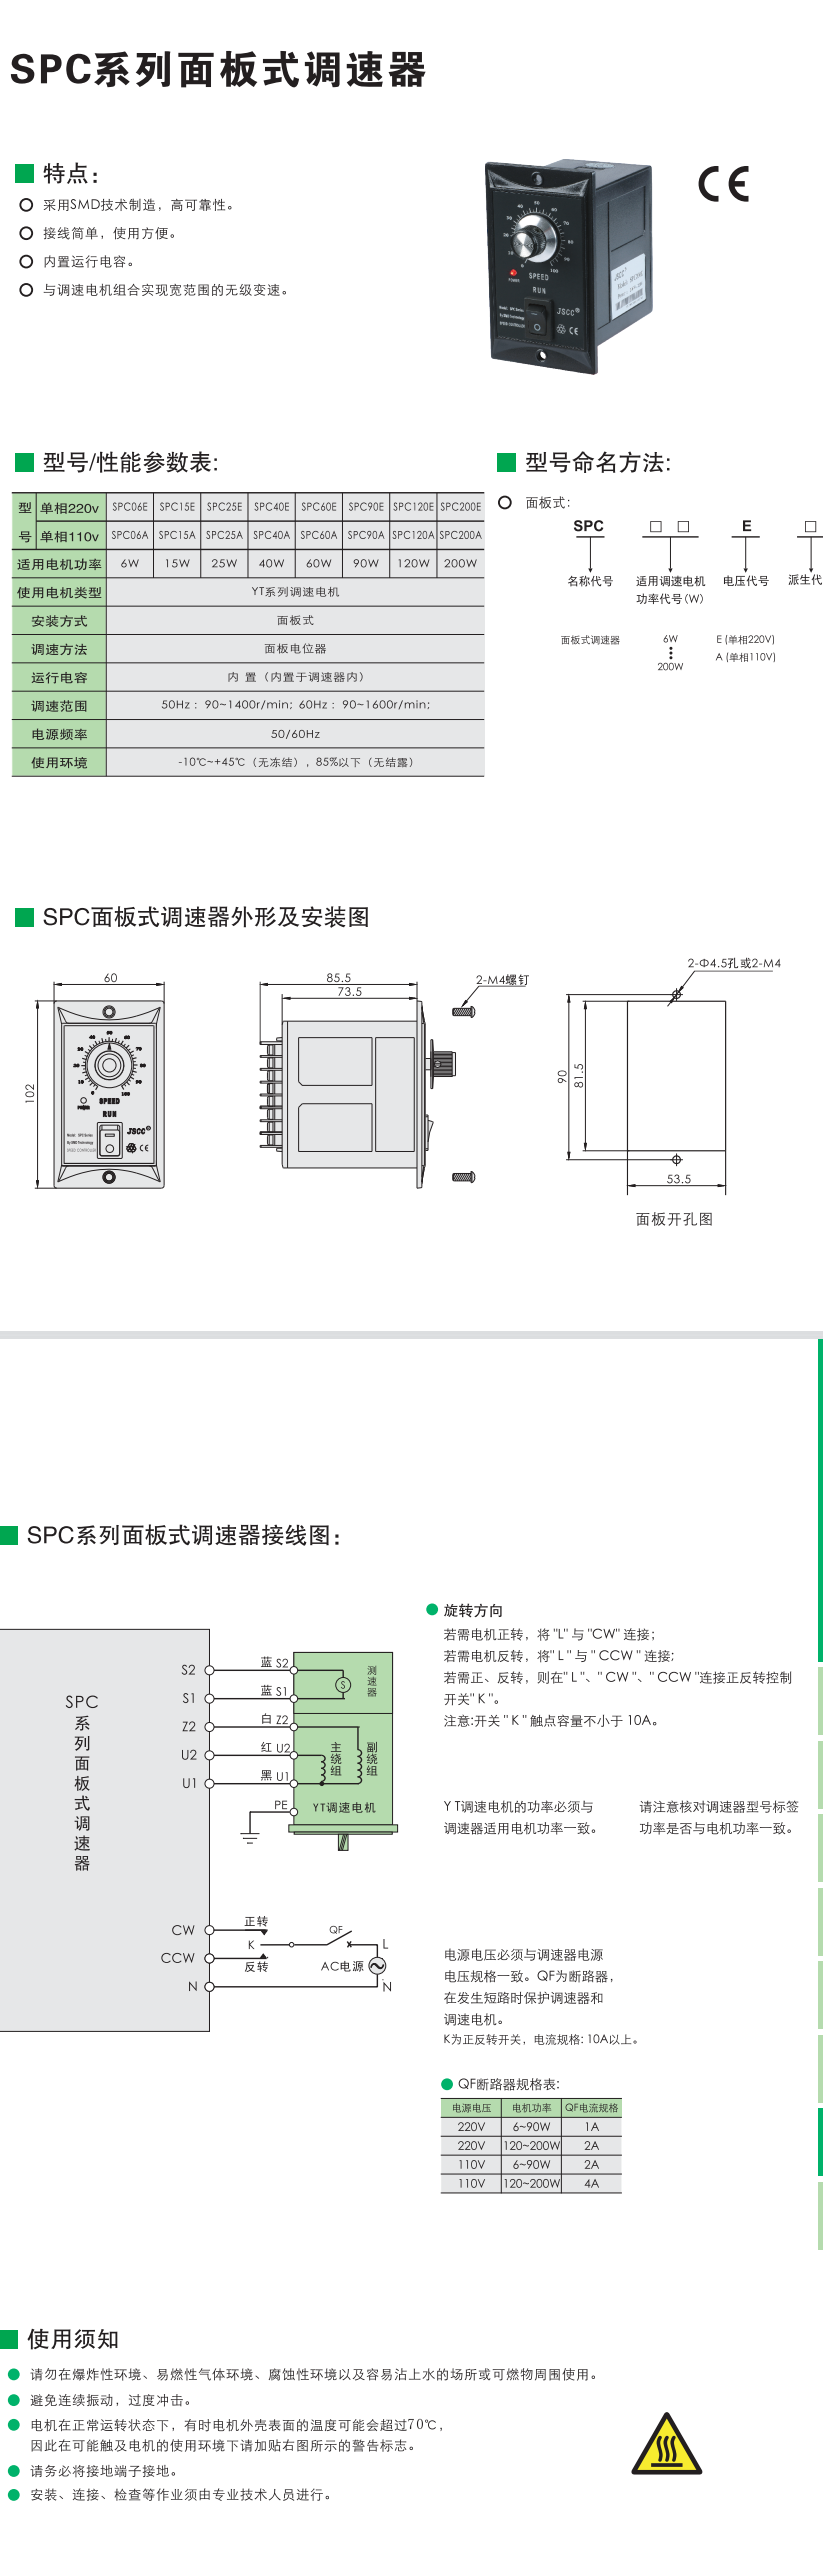 SPC系列面板式调速器(图1)